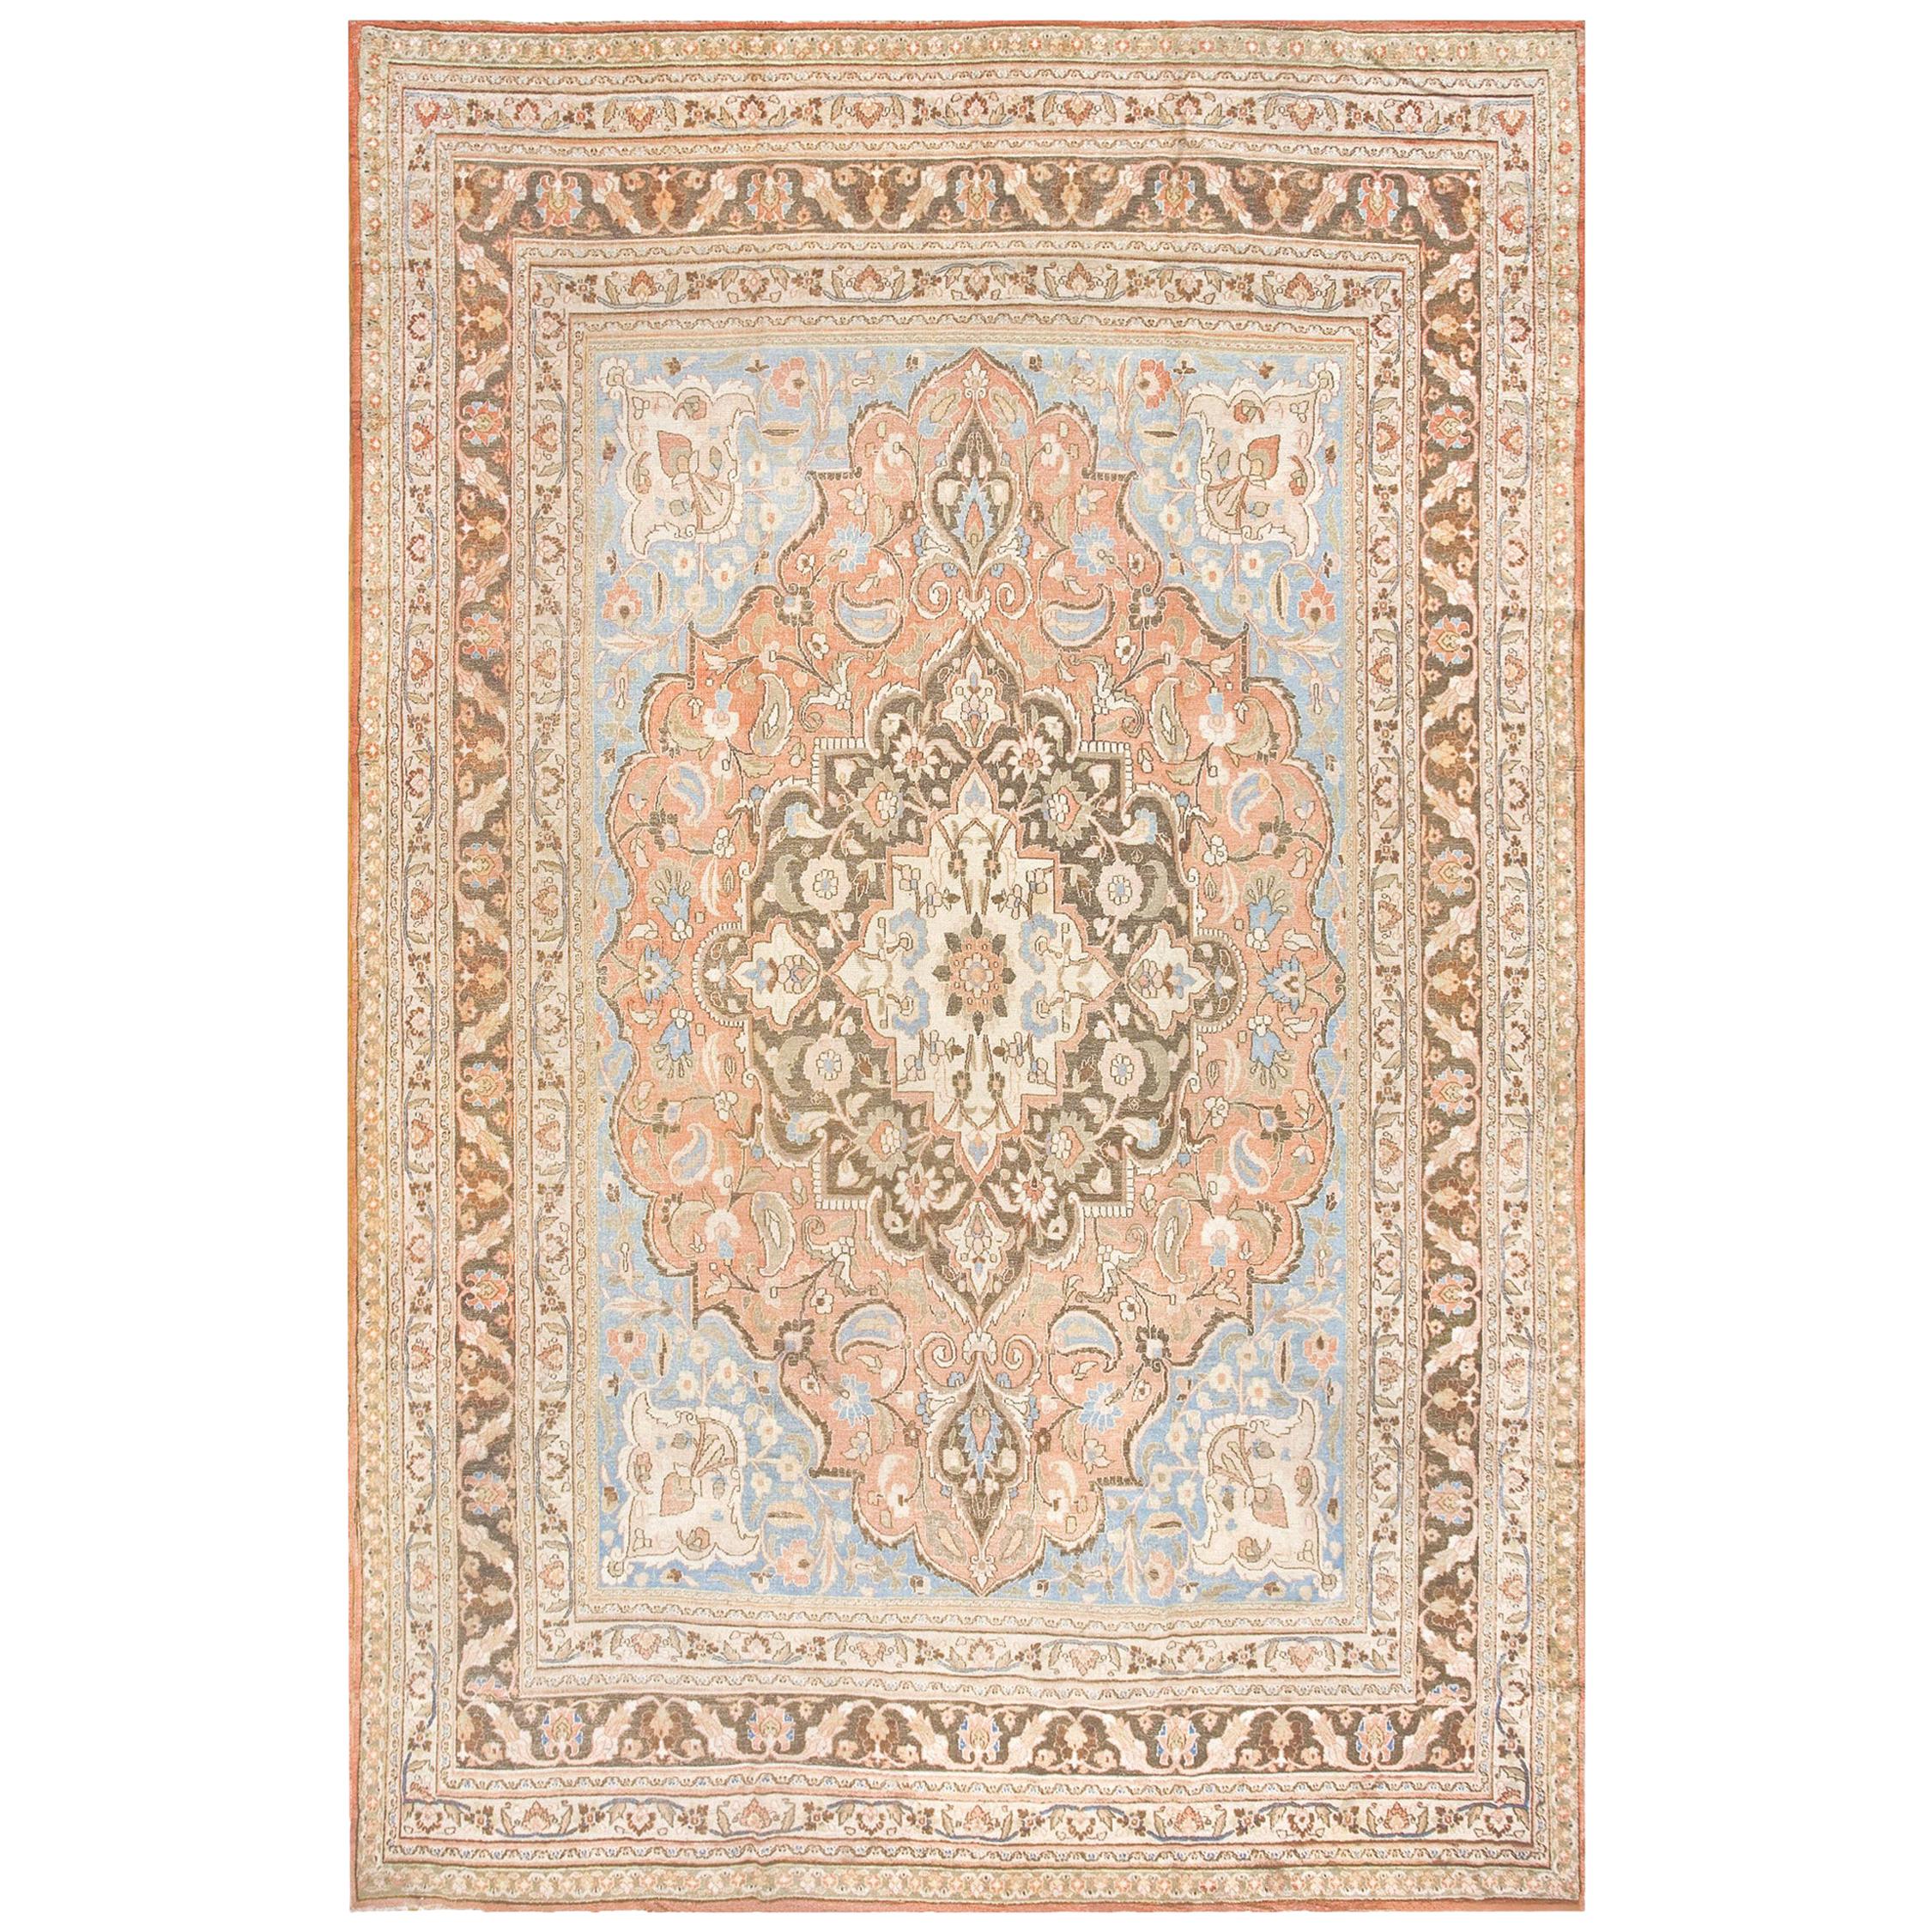 19th Century N.E. Persian Khorassan Moud Carpet ( 10'2" x 15'10" - 310 x 483 )